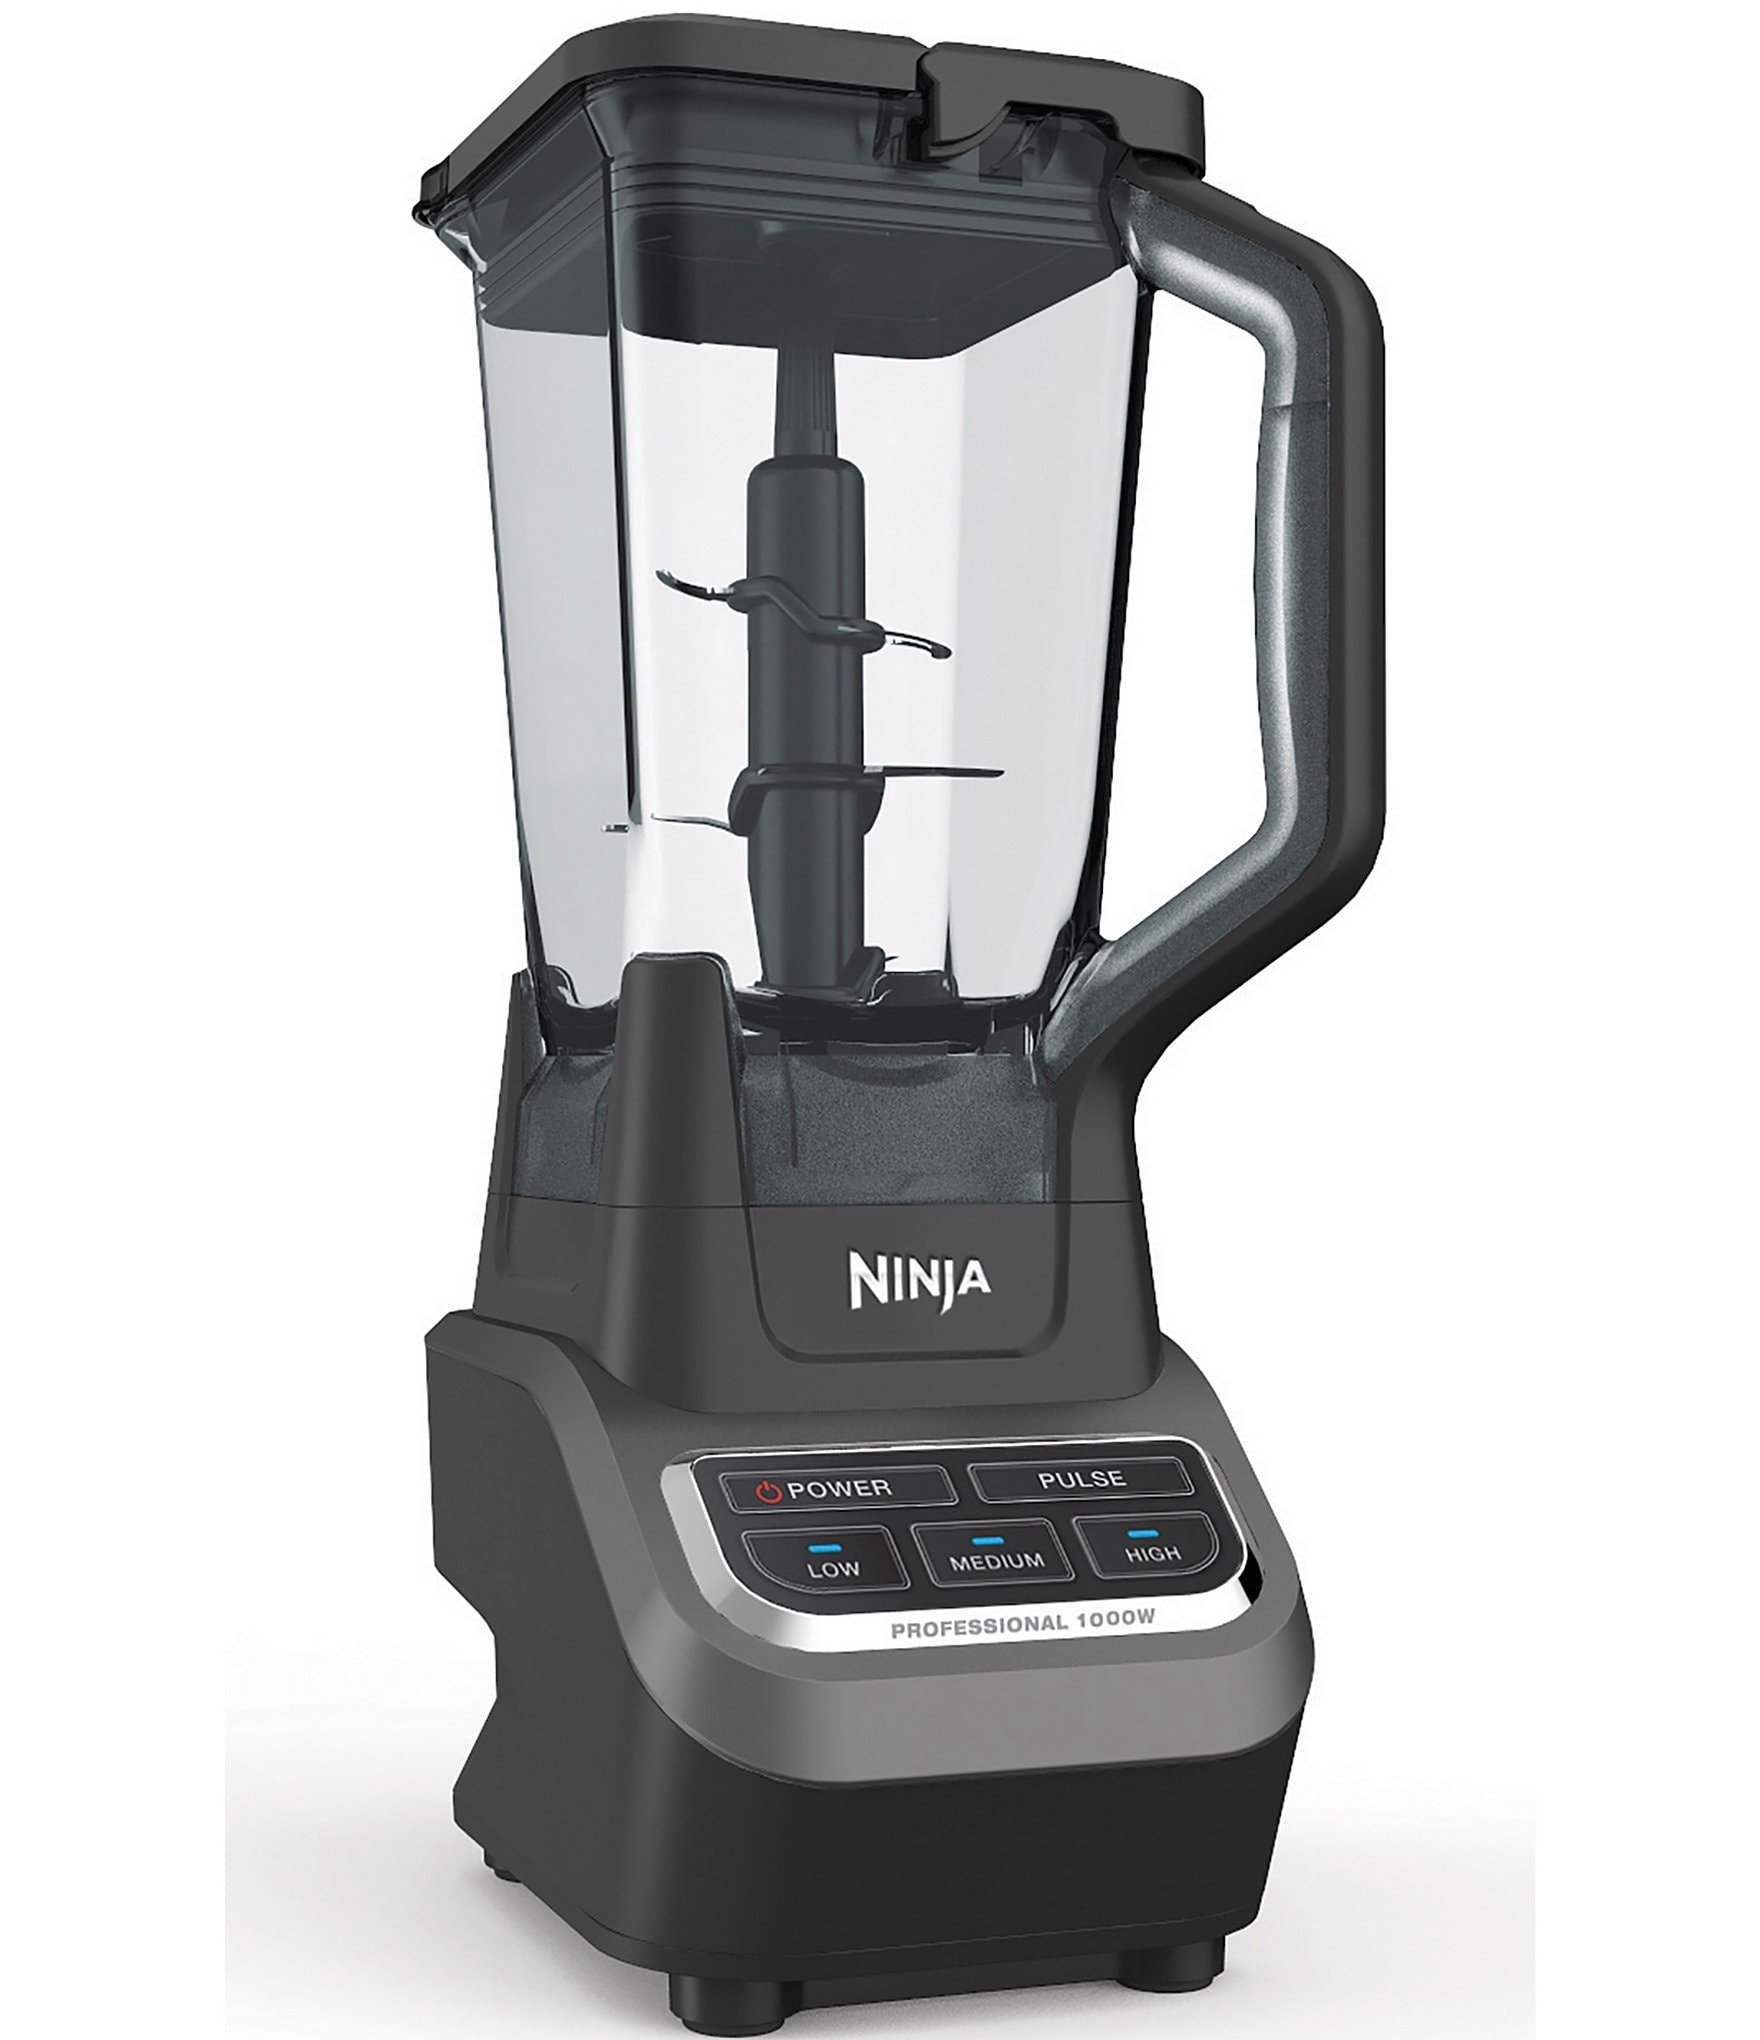 NINJA Professional Blender, 72 oz. 3 Speed 1000-Watt Blender